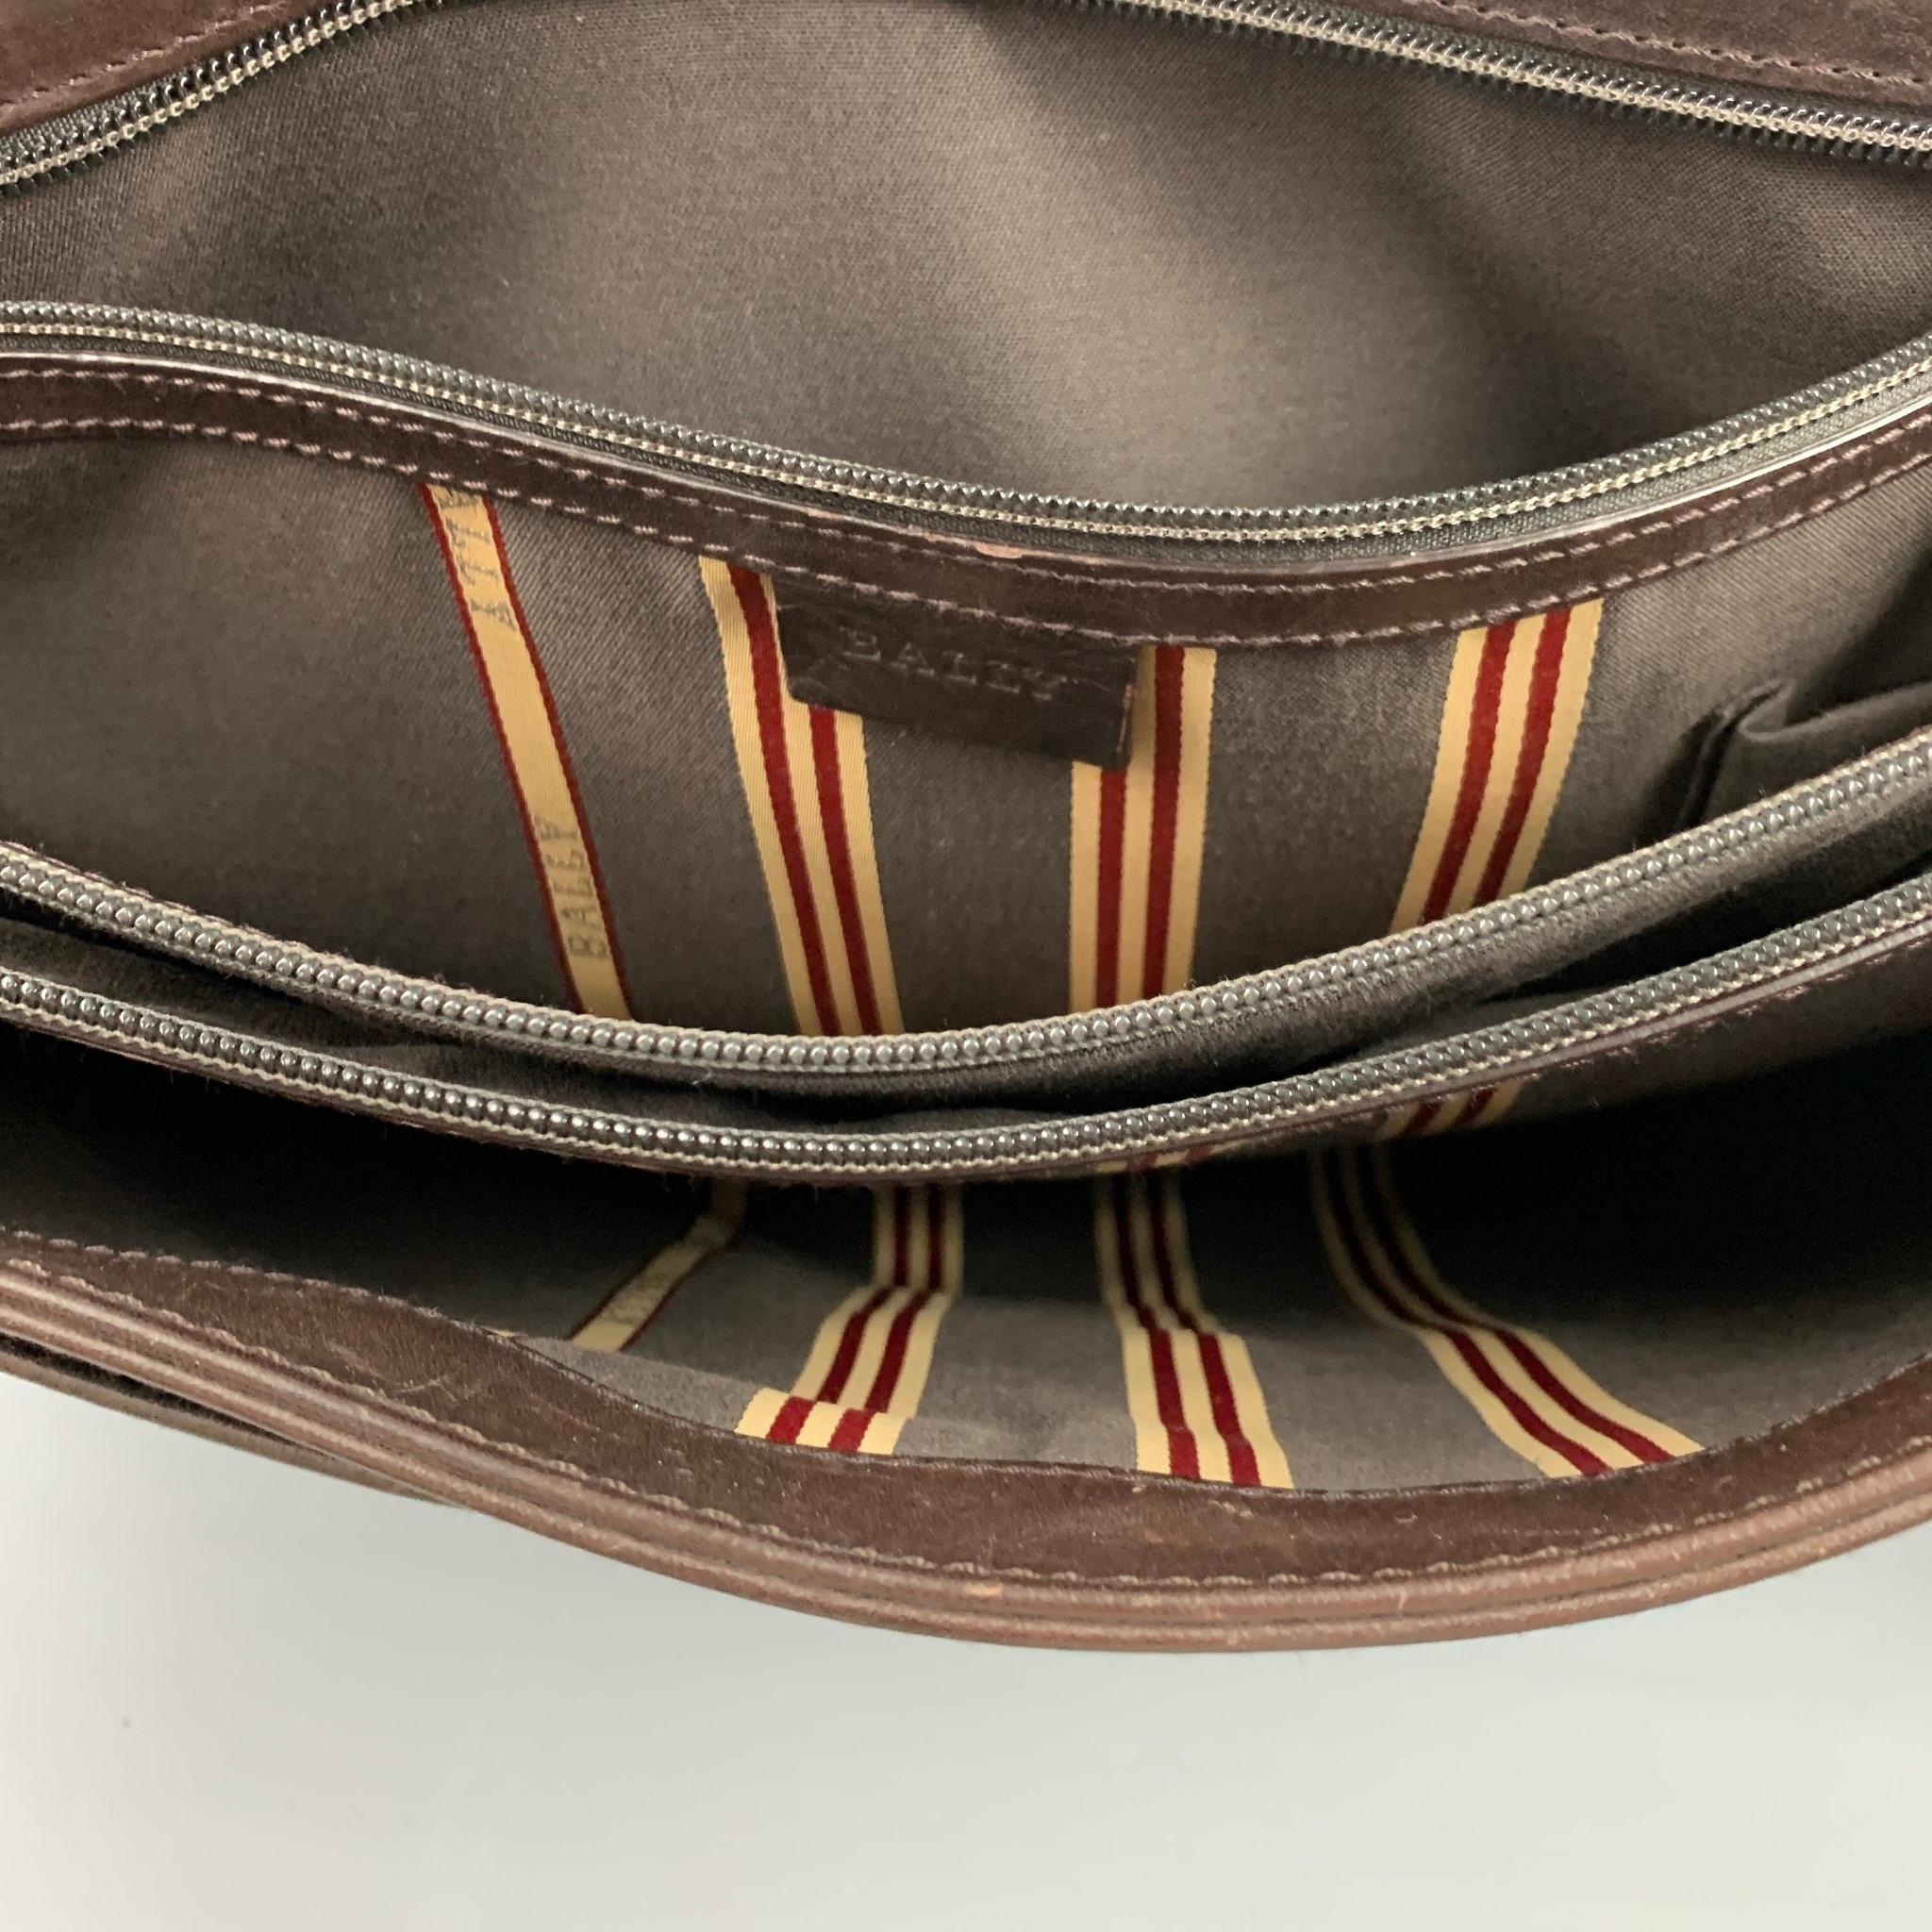 BALLY Brown Leather Crossbody Briefcase Bag 1